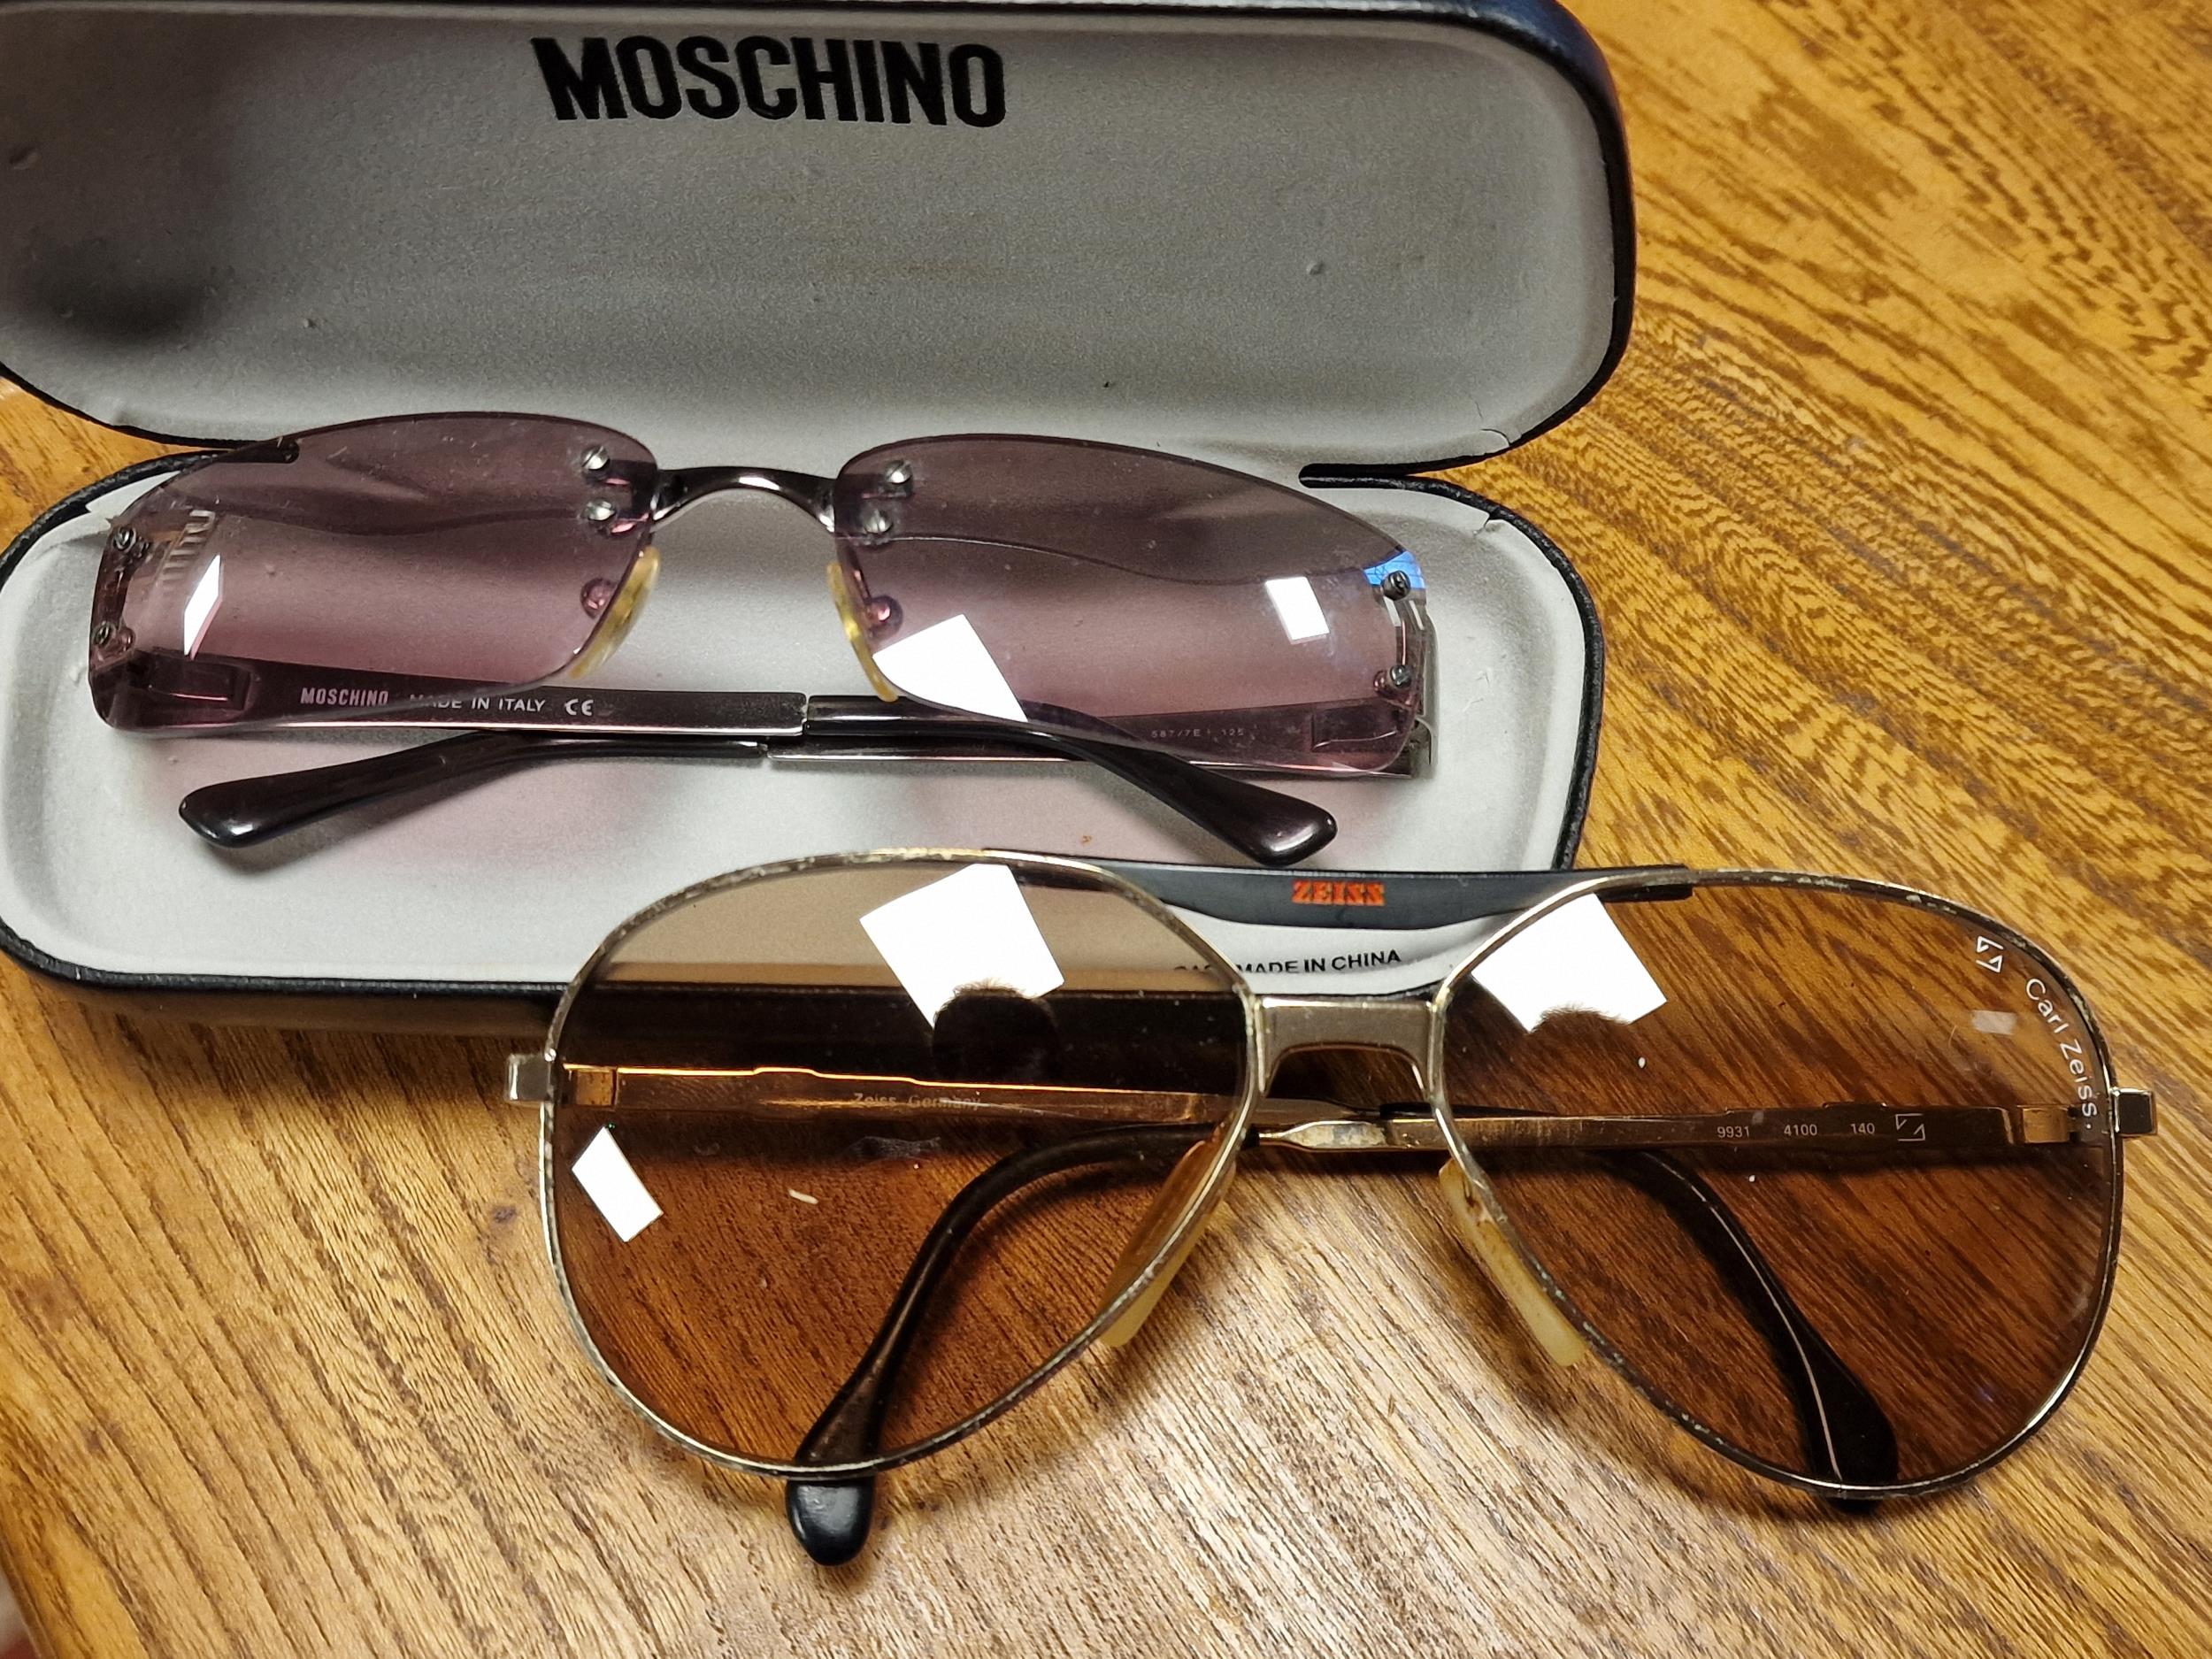 2x Designer Sunglasses - Moschino & Carl Zeiss - no authentication though